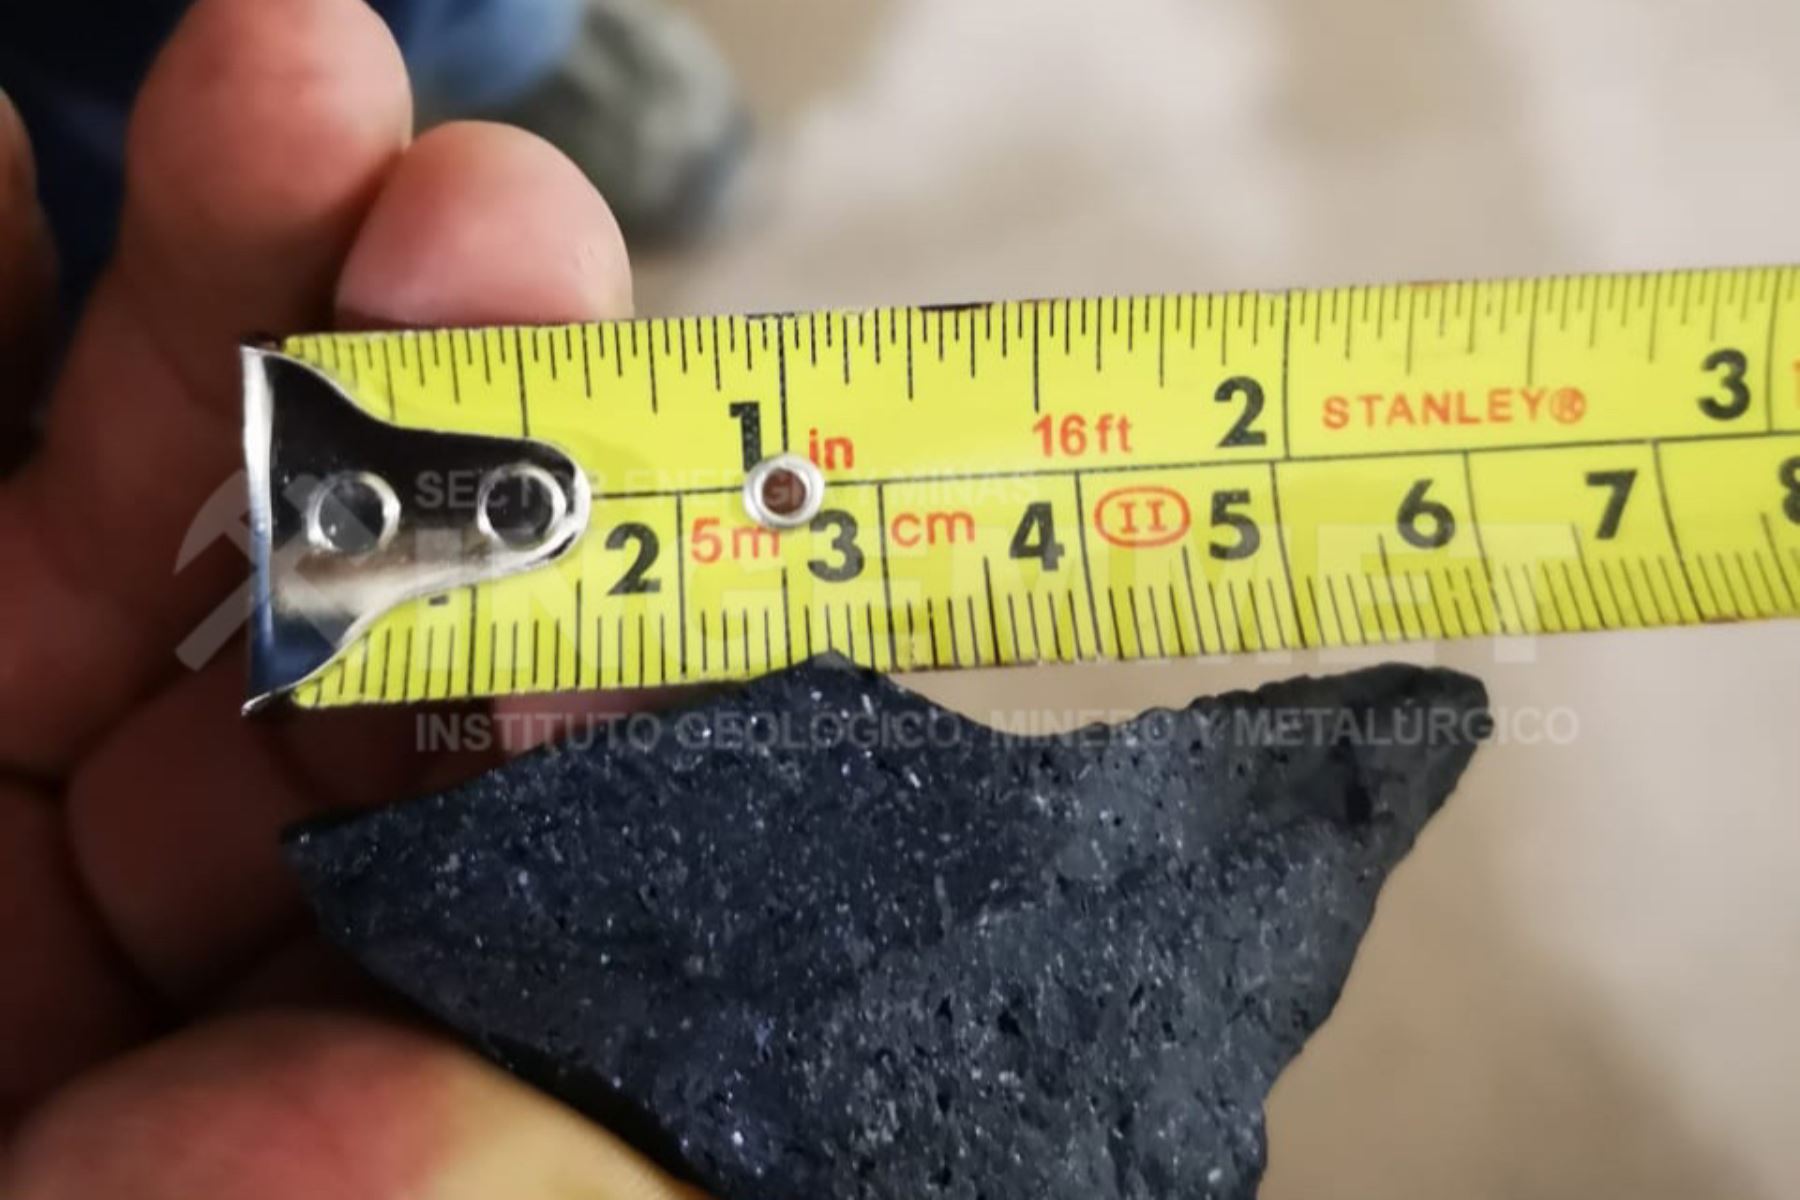 Proyectiles balísticos o fragmentos incandescentes expulsados por el volcán Ubinas miden hasta 6.4 centímetros. Foto: Ingemmet